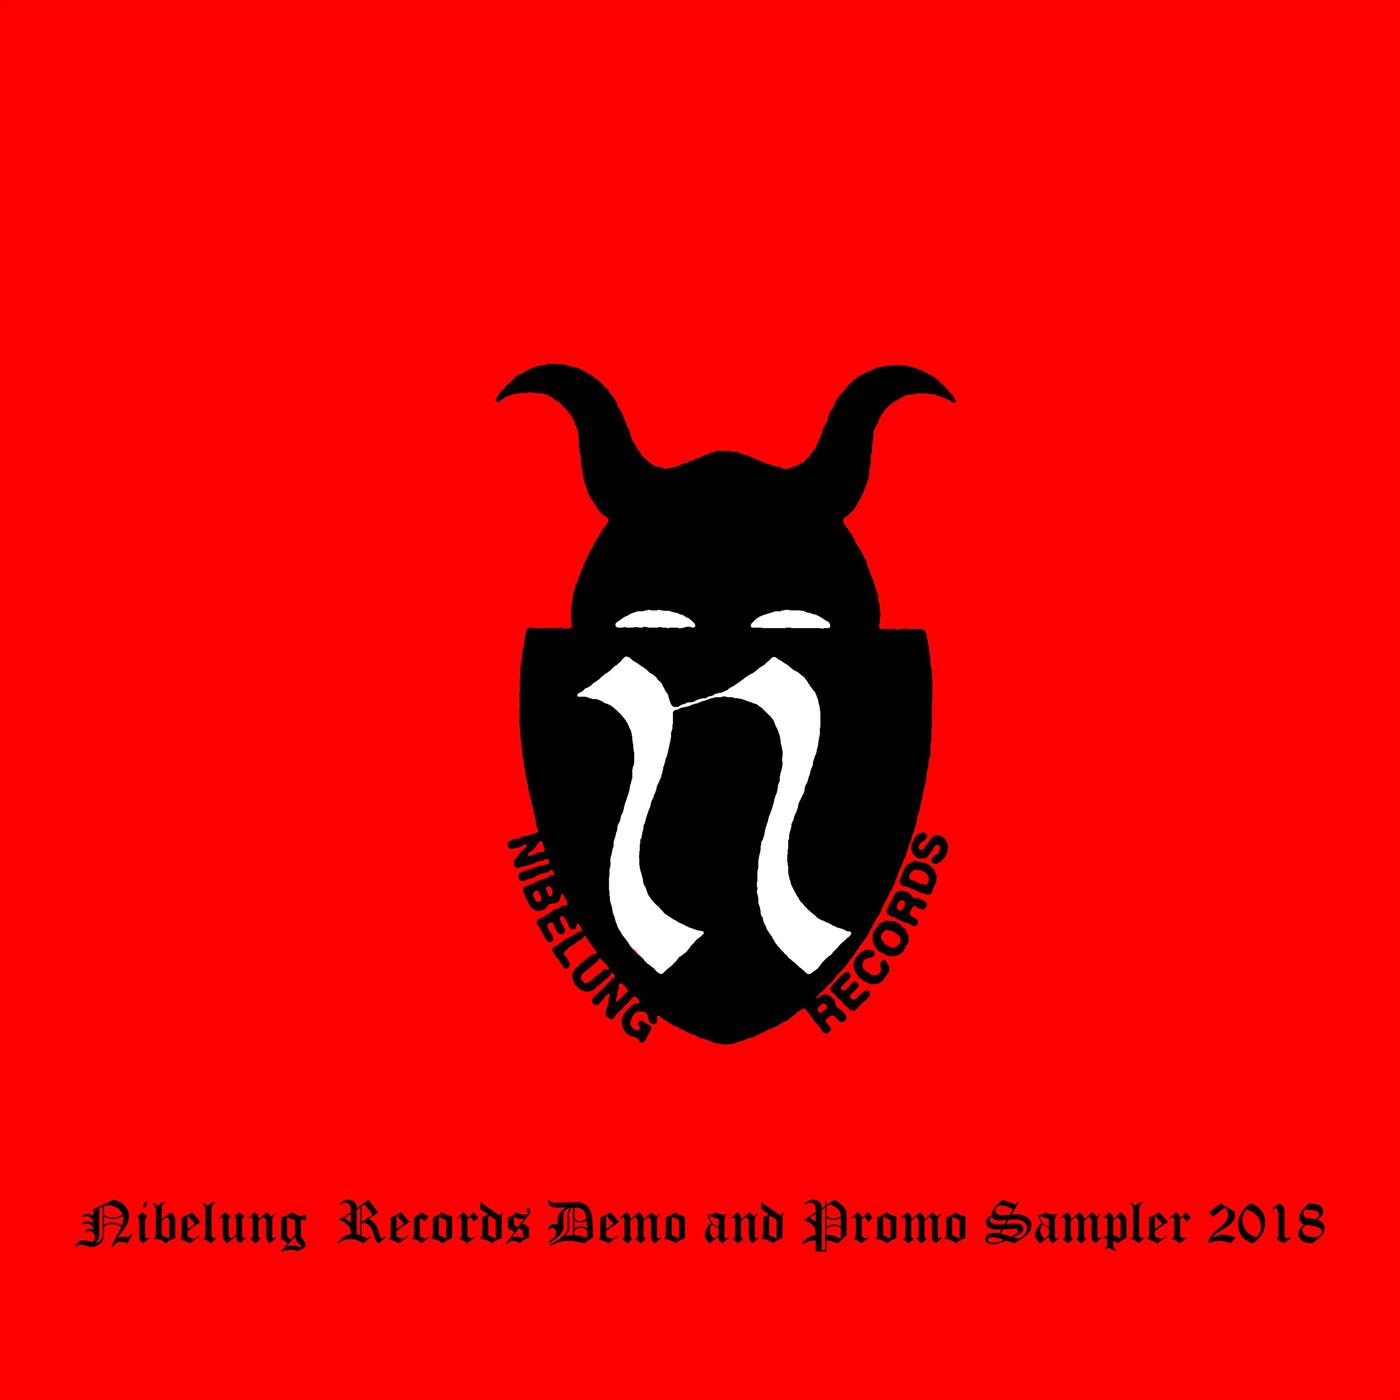 Nibelung Records Demo and Promo Sampler 2018